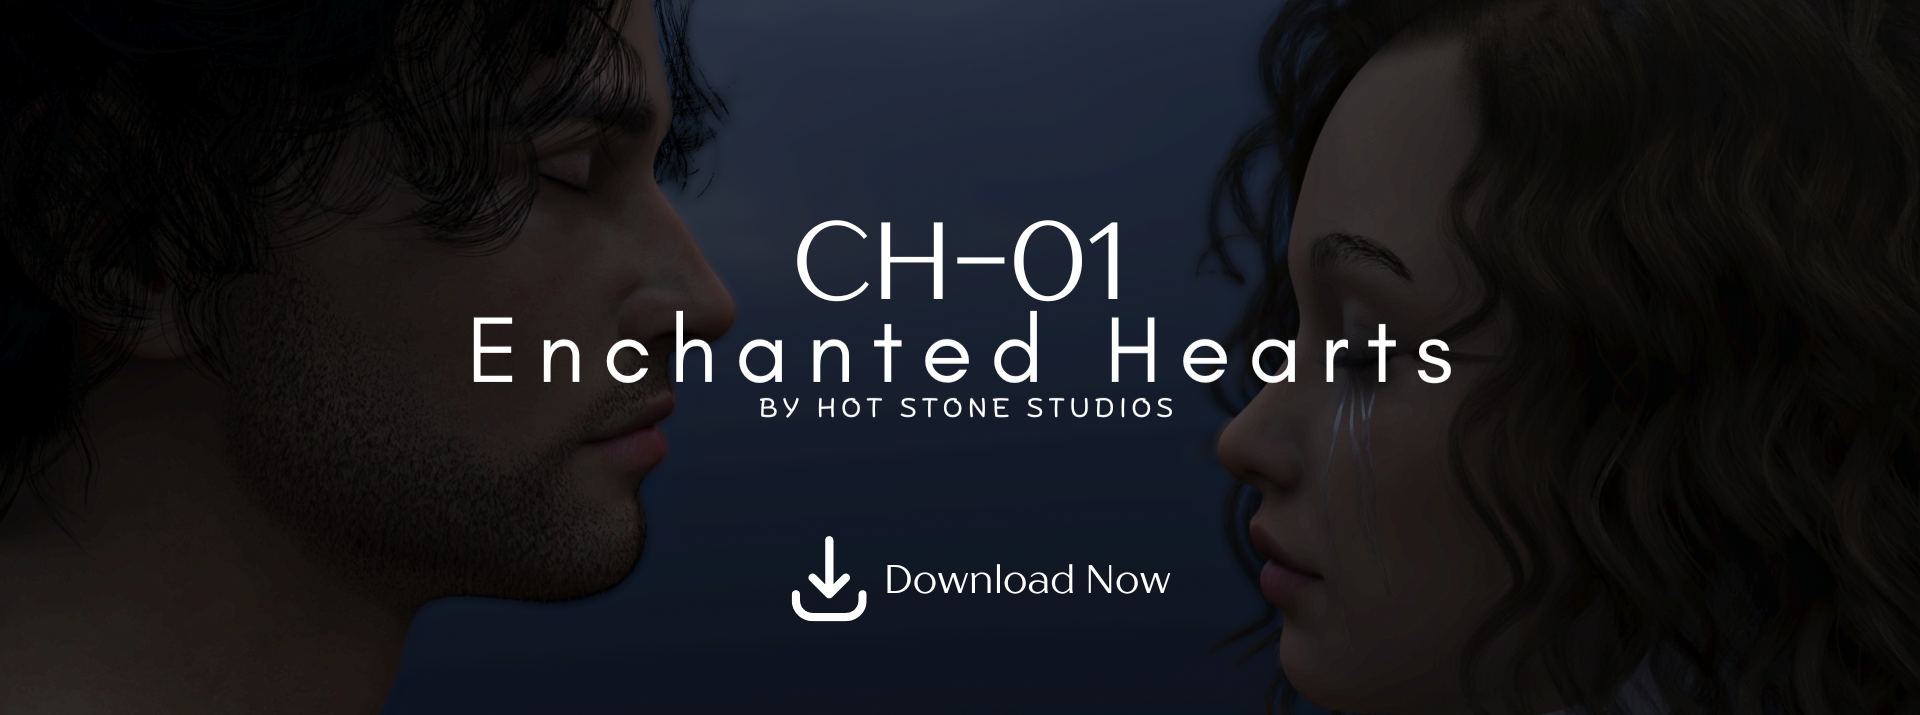 Enchanted Hearts - CH01